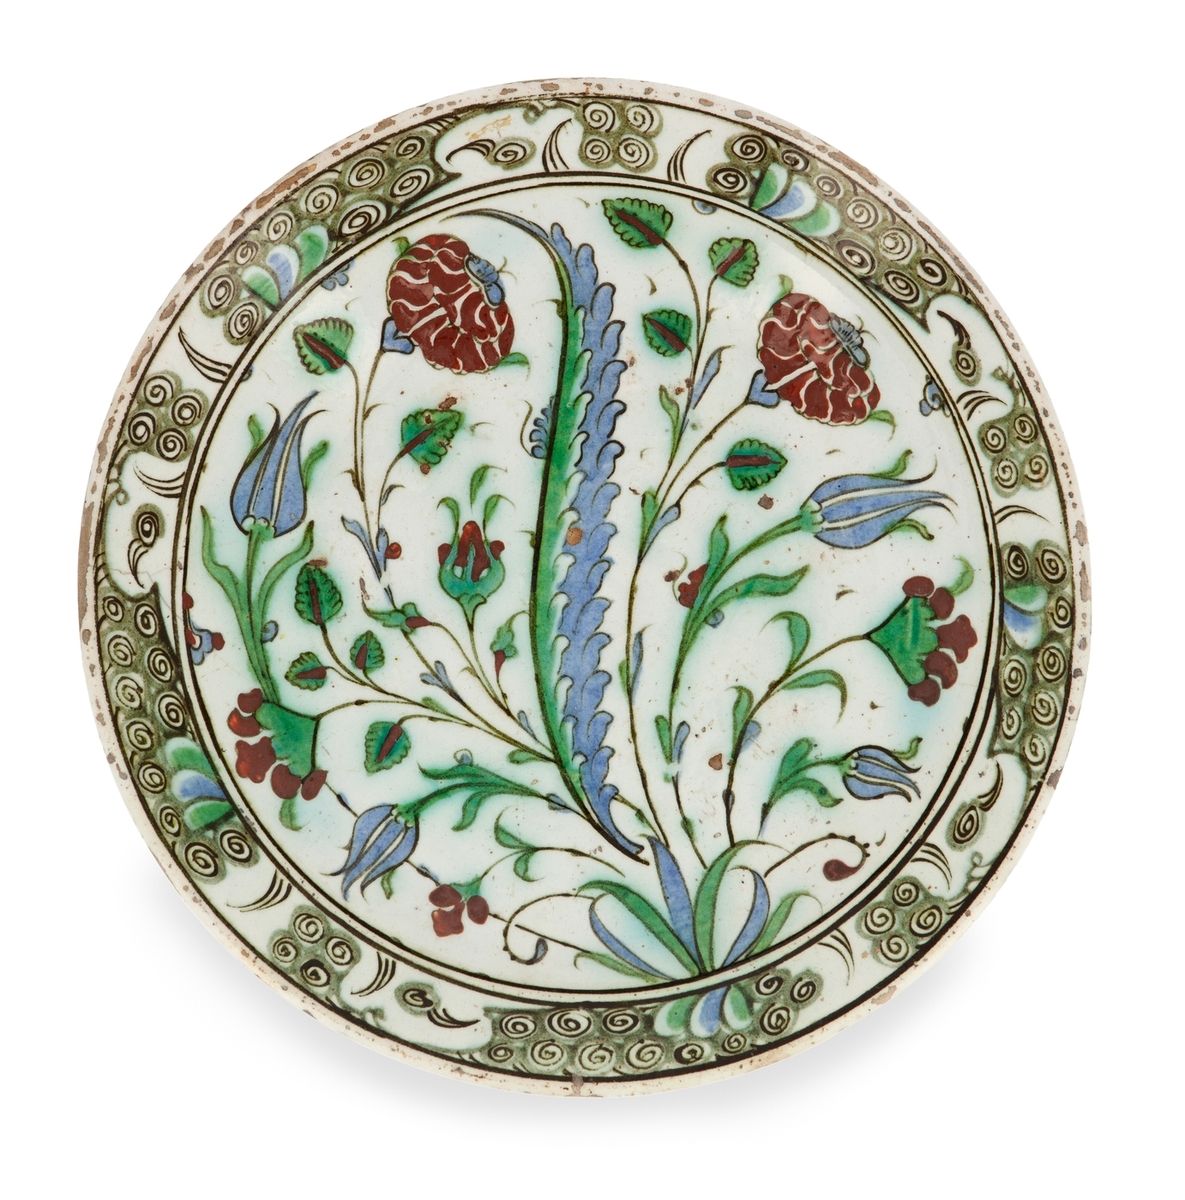 Null Ottoman Tabak with flowers
Iznik, Turkey, 17th century
Siliceous ceramic di&hellip;